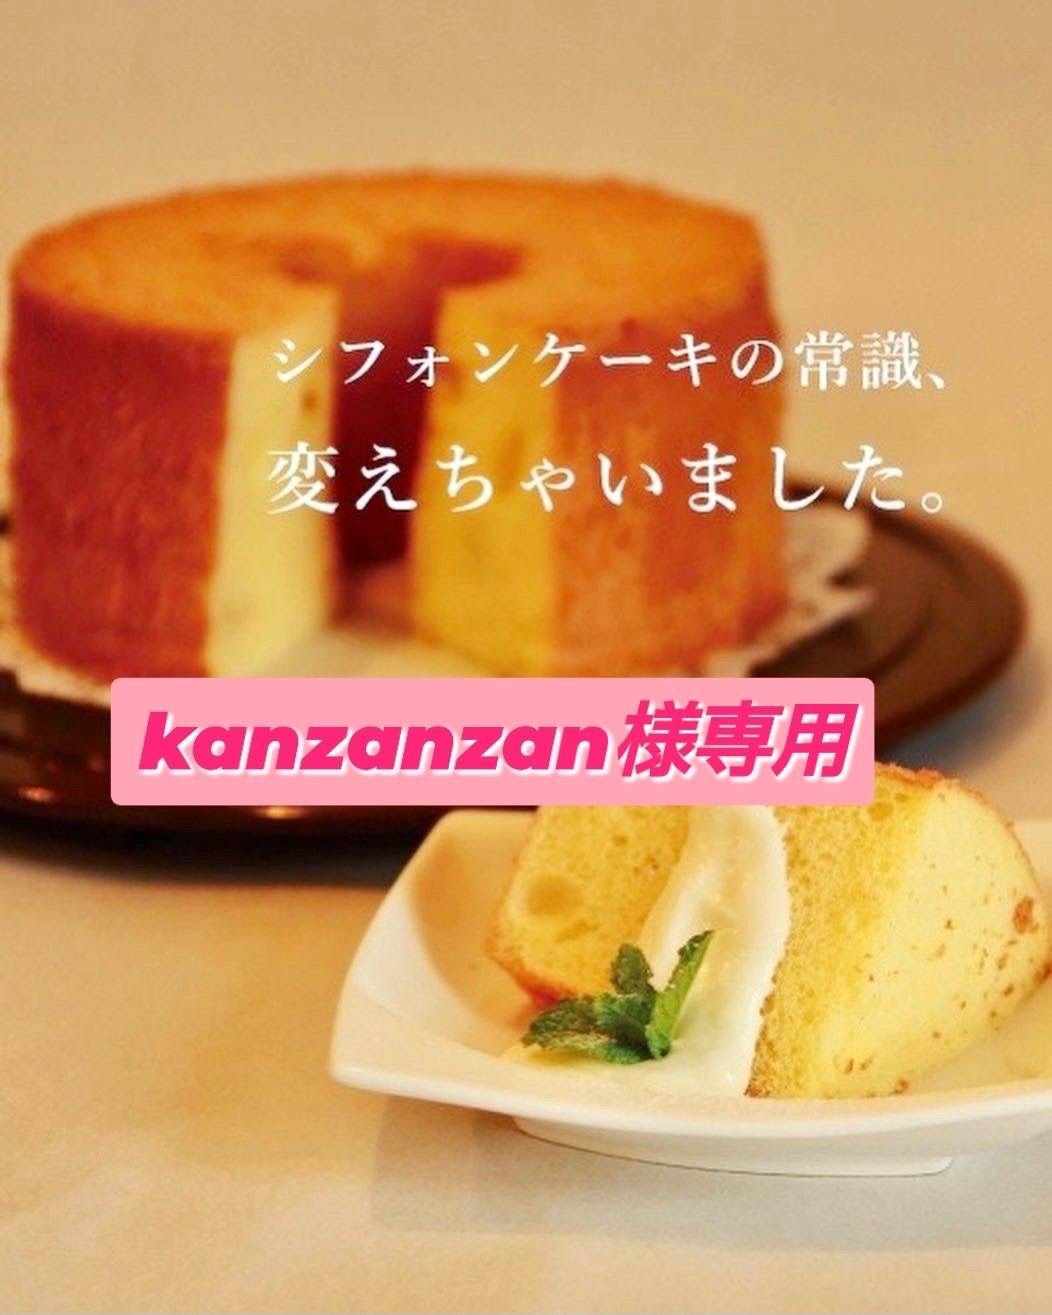 kanzanzan様専用 カットシフォンケーキ10個セット - 創作